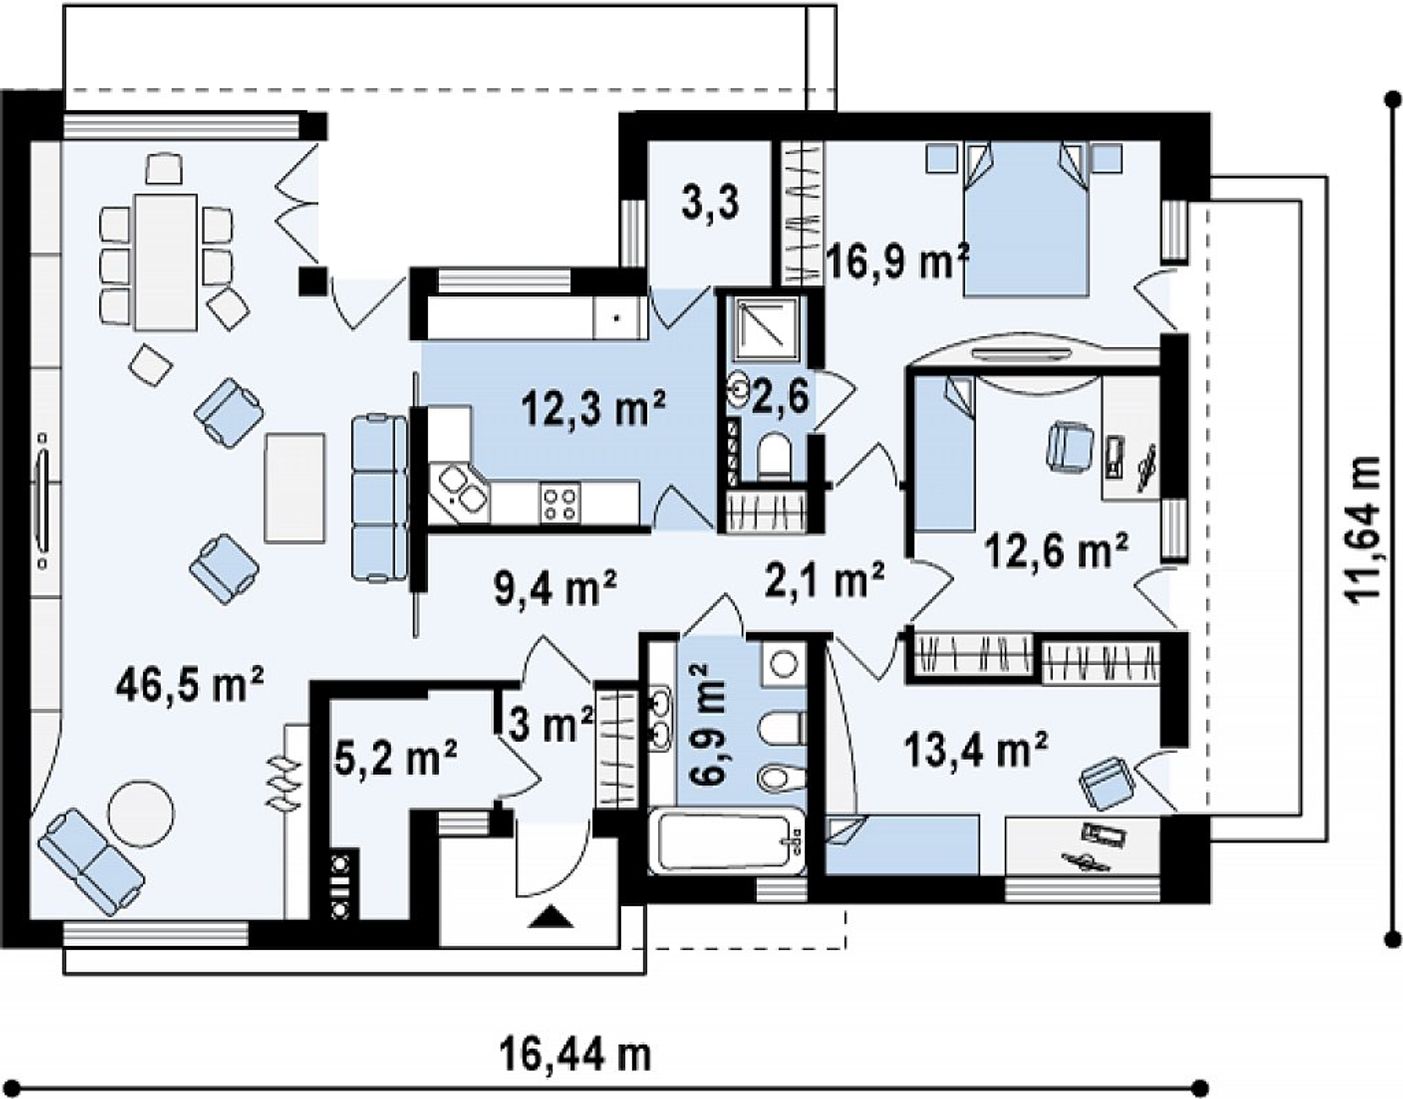 1-ый этаж - план проекта Zx34